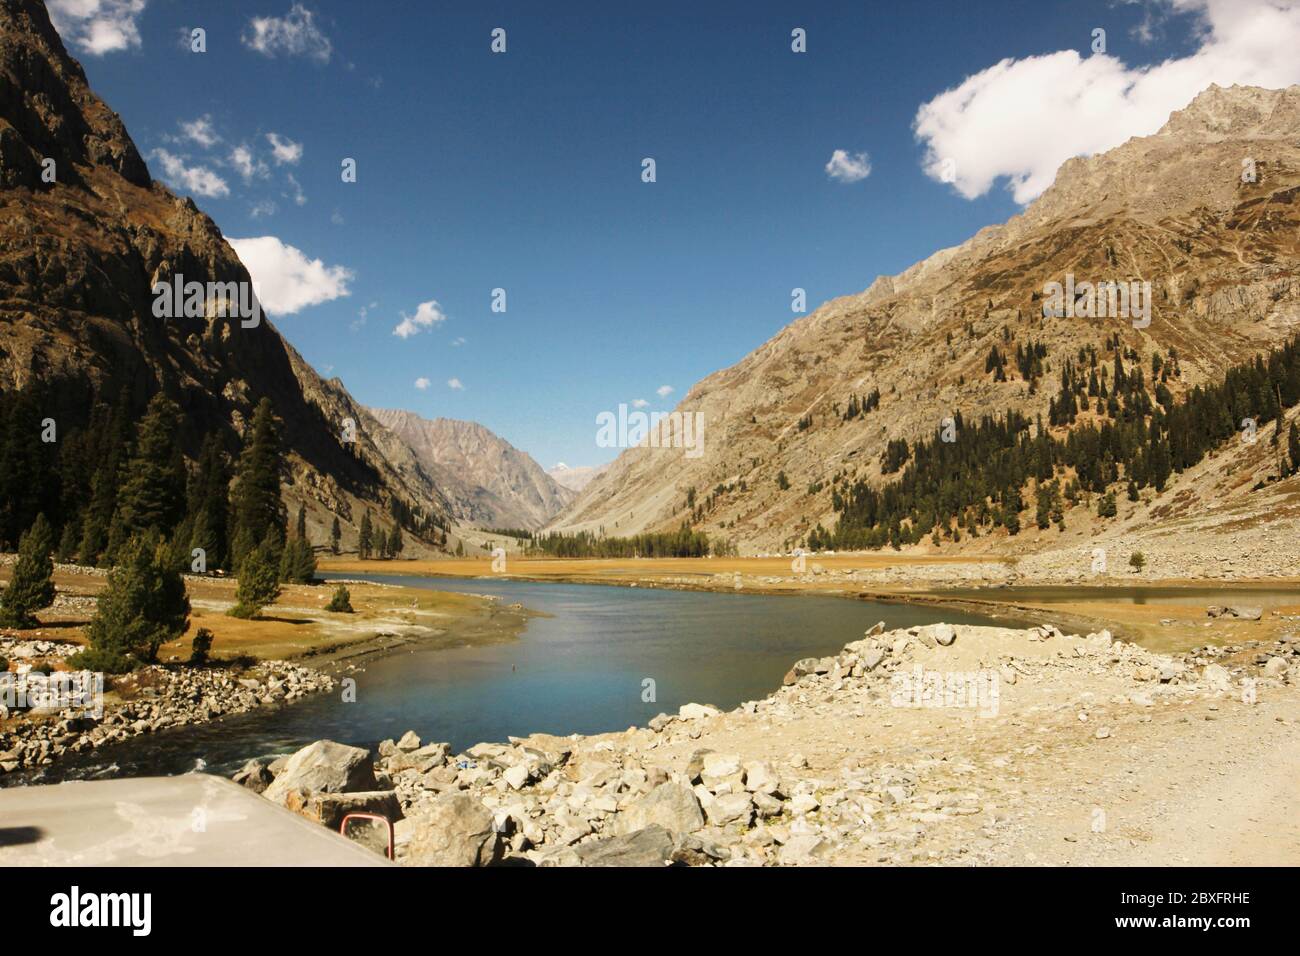 Beautiful Mahodand Lake and mountains in Pakistan Stock Photo